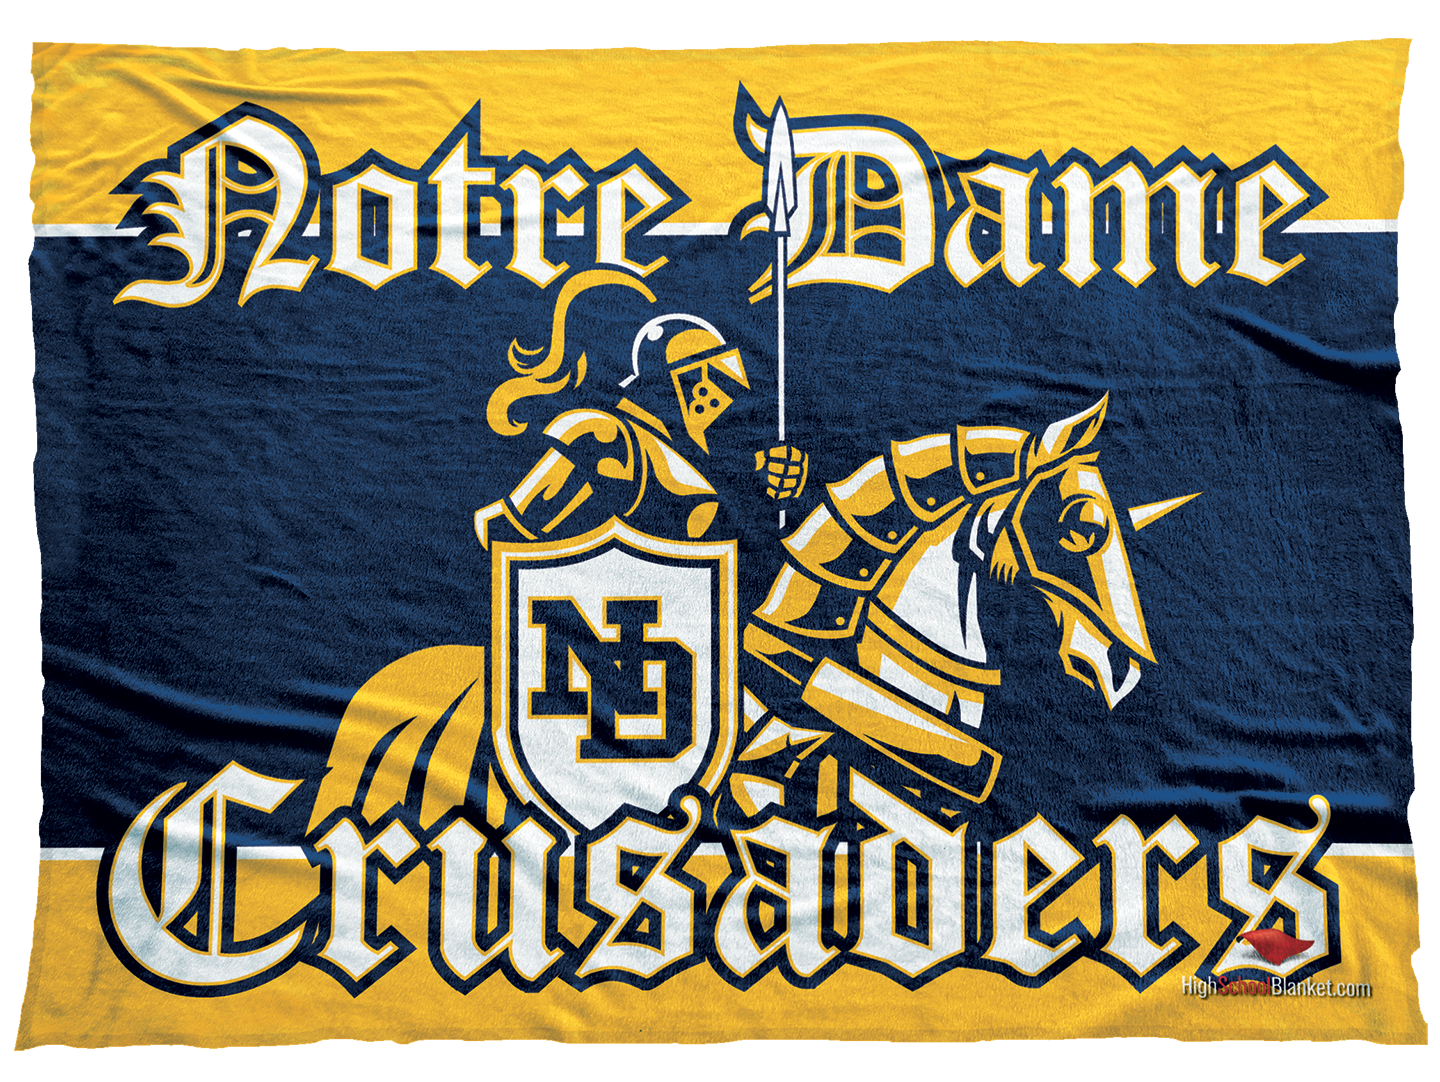 Notre Dame Crusaders